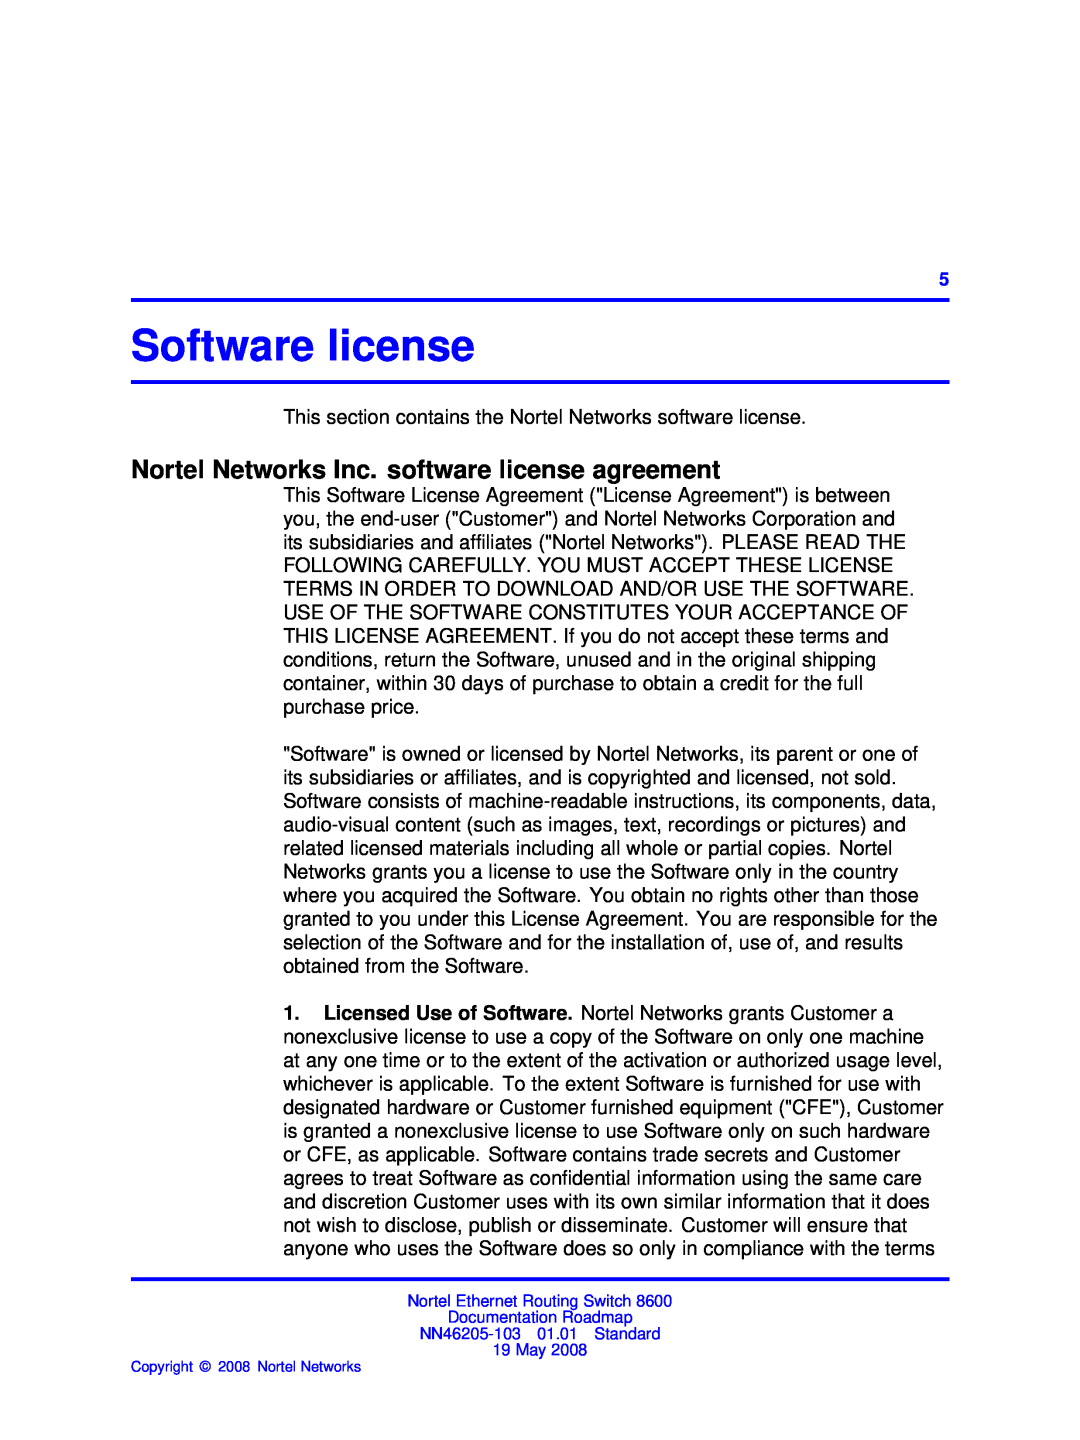 Nortel Networks 8600 manual Software license, Nortel Networks Inc. software license agreement 